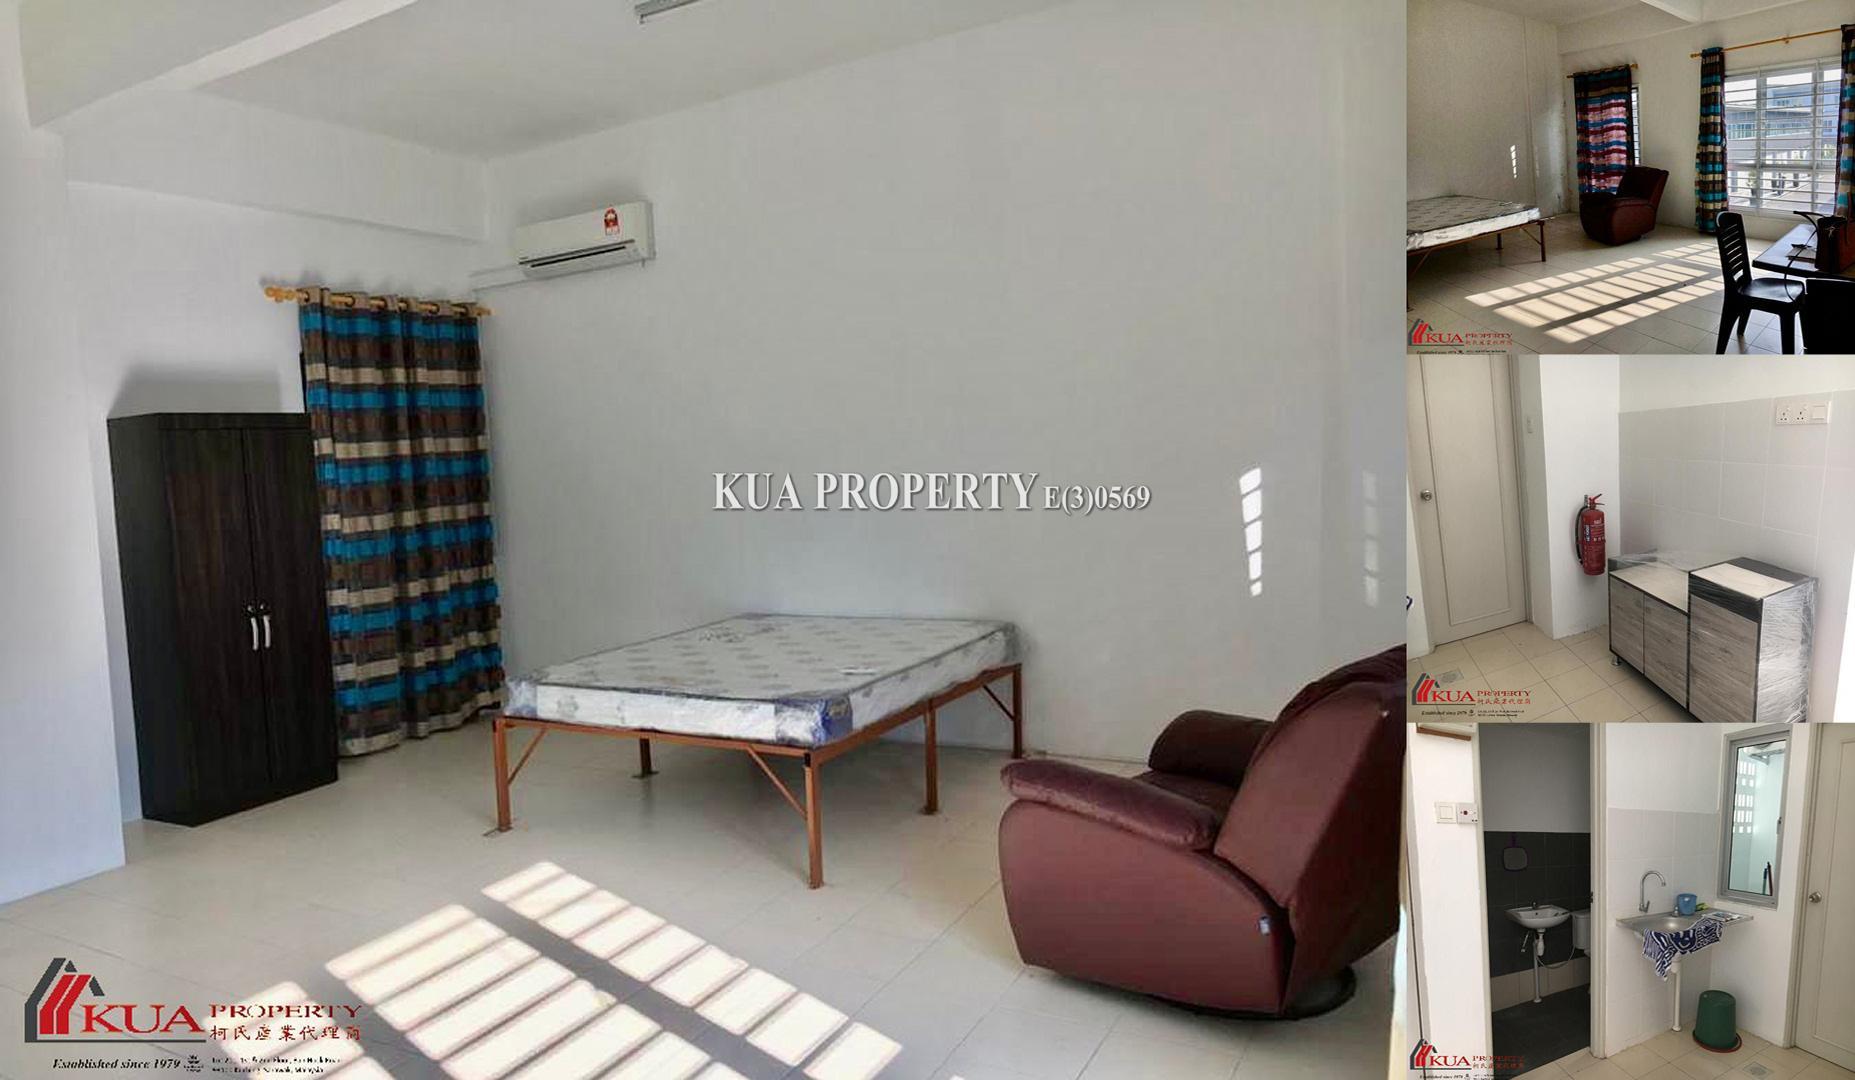 Papillon Apartment (Studio Unit) For Sale! at MJC, Batu Kawa